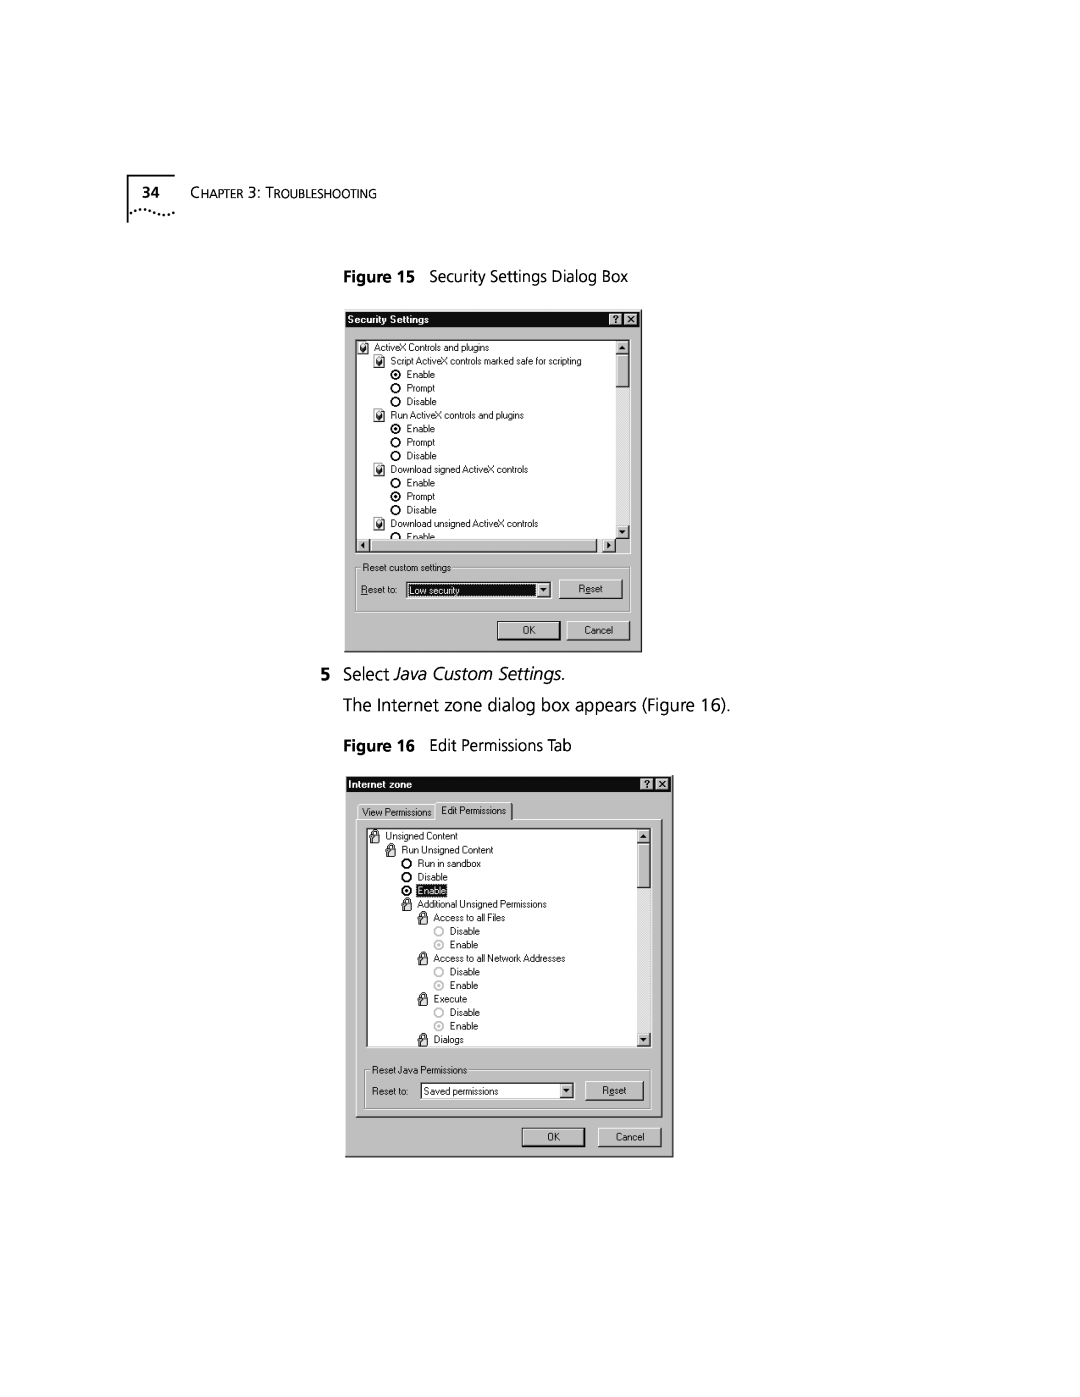 3Com 3900 manual Select Java Custom Settings, The Internet zone dialog box appears Figure, Troubleshooting 